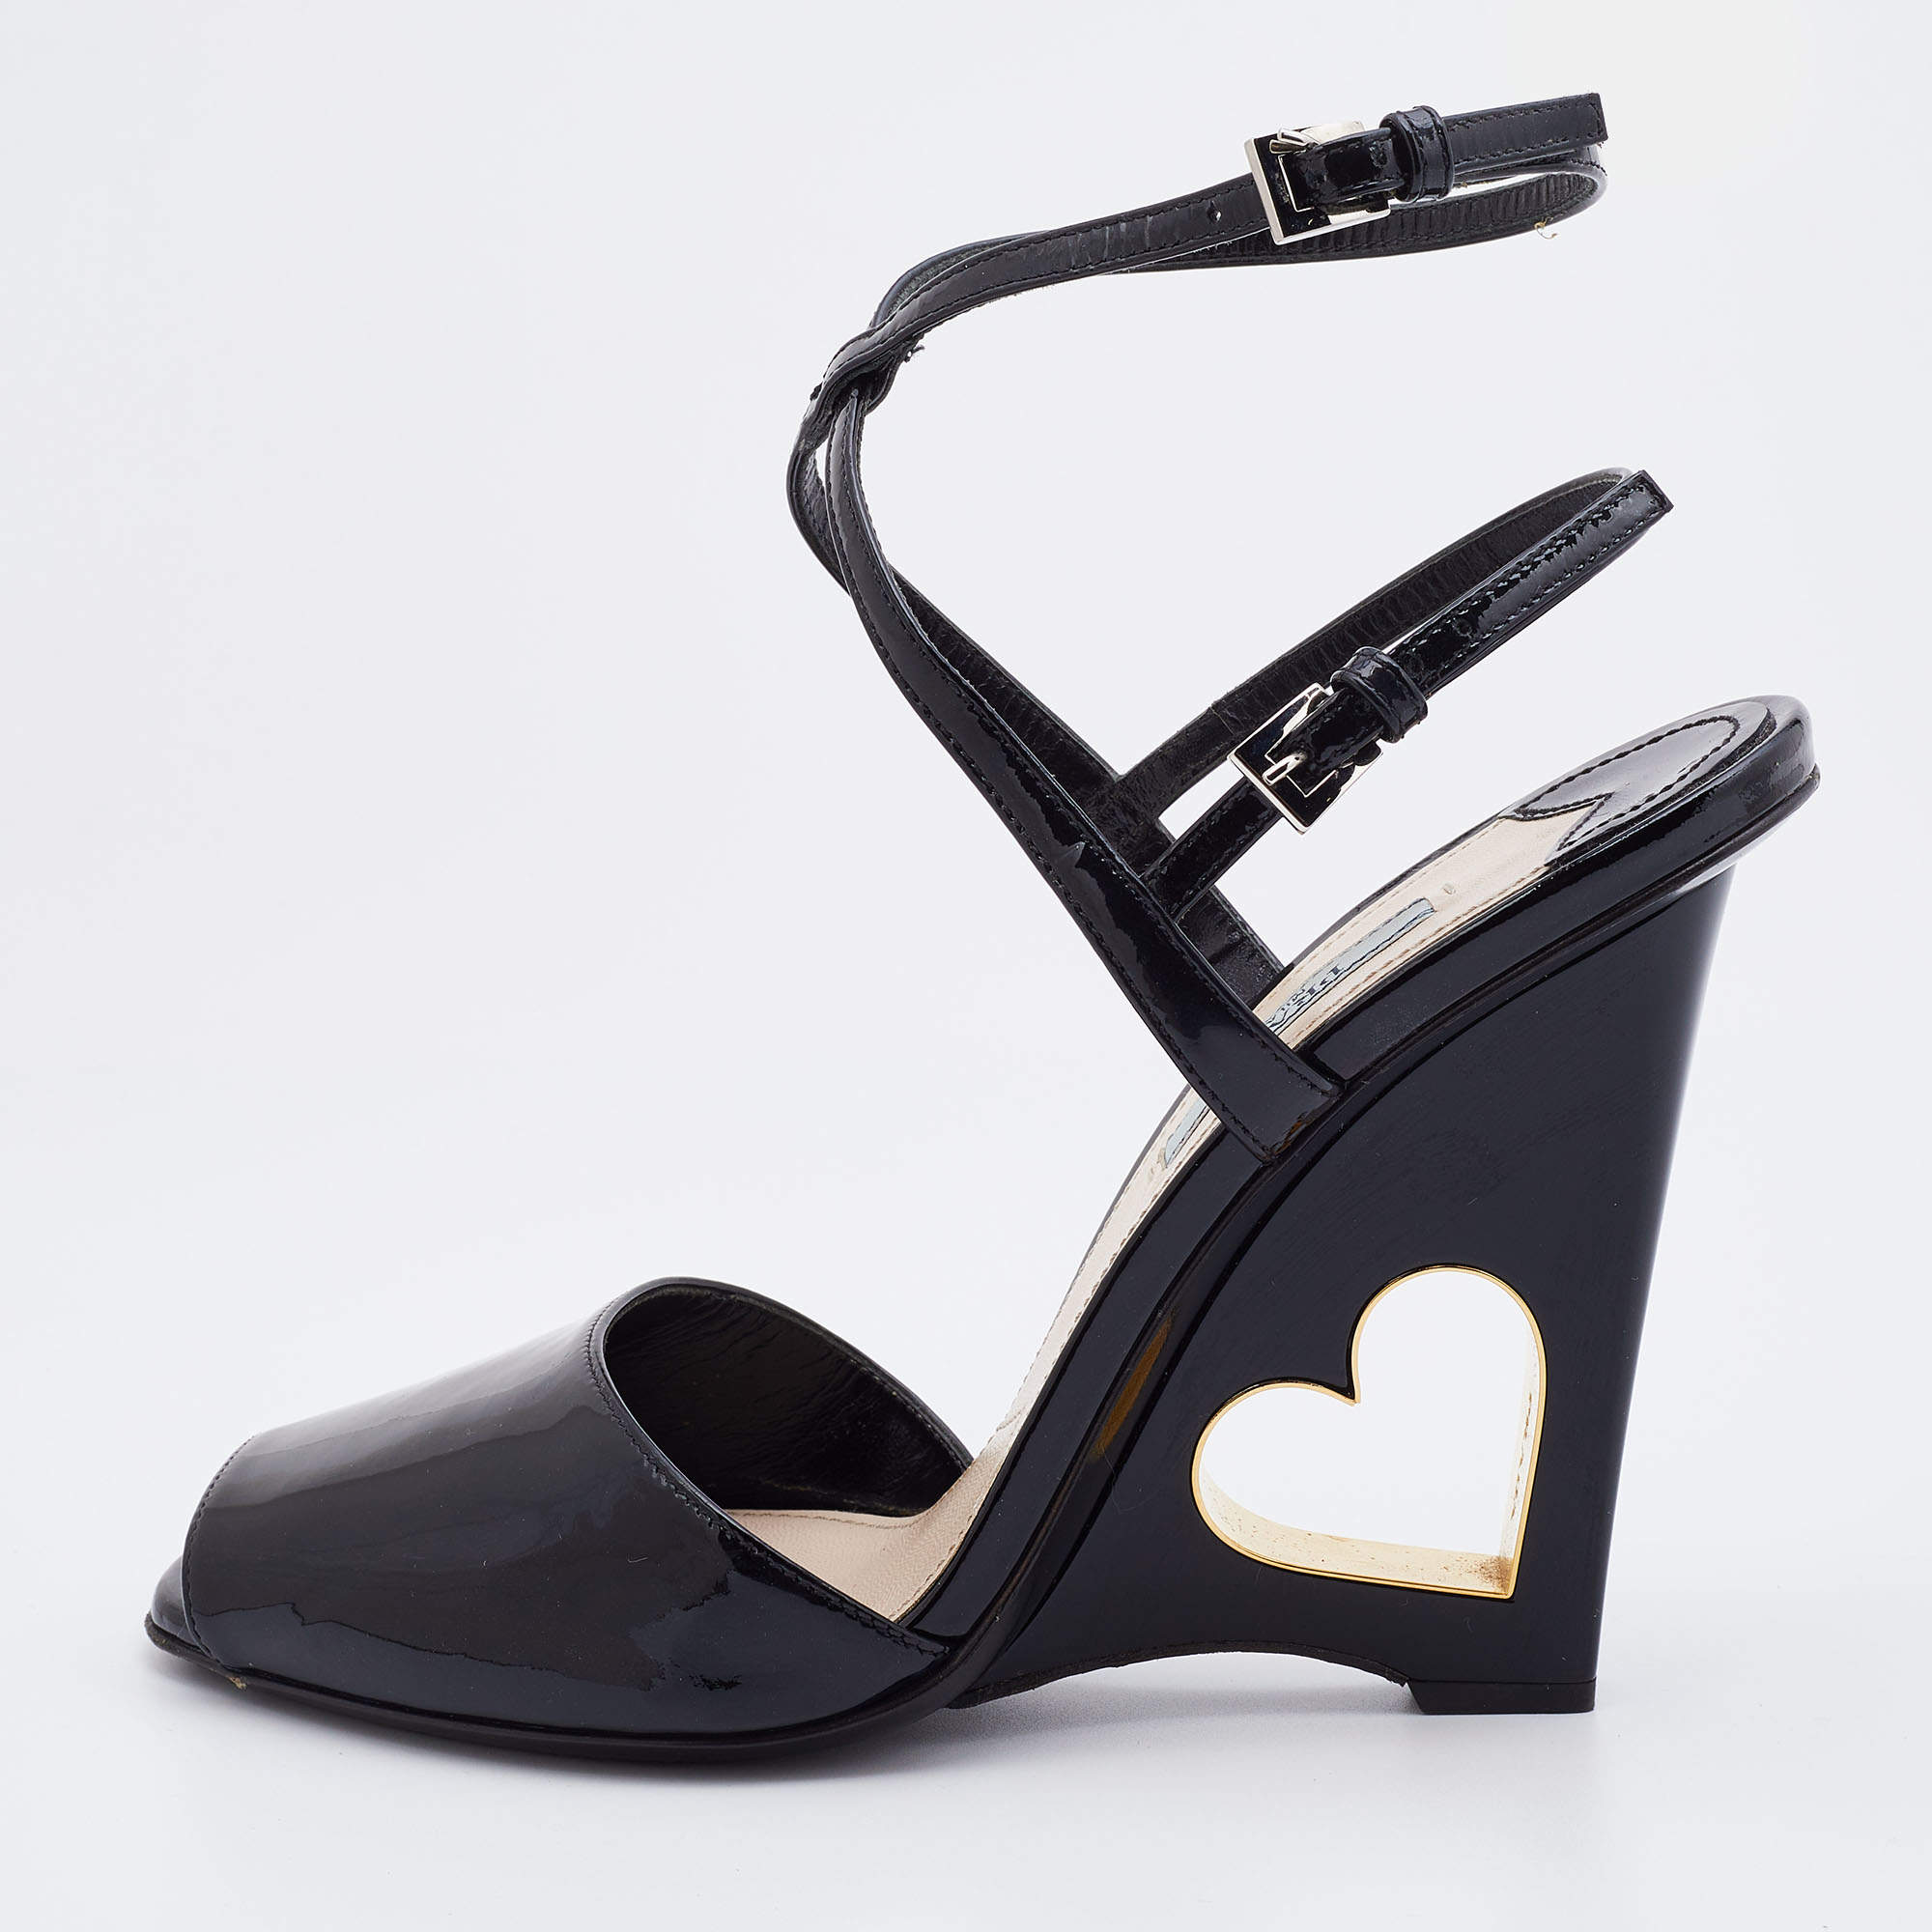 Prada Black Patent Leather Wedge Criss Cross Sandals Size 39